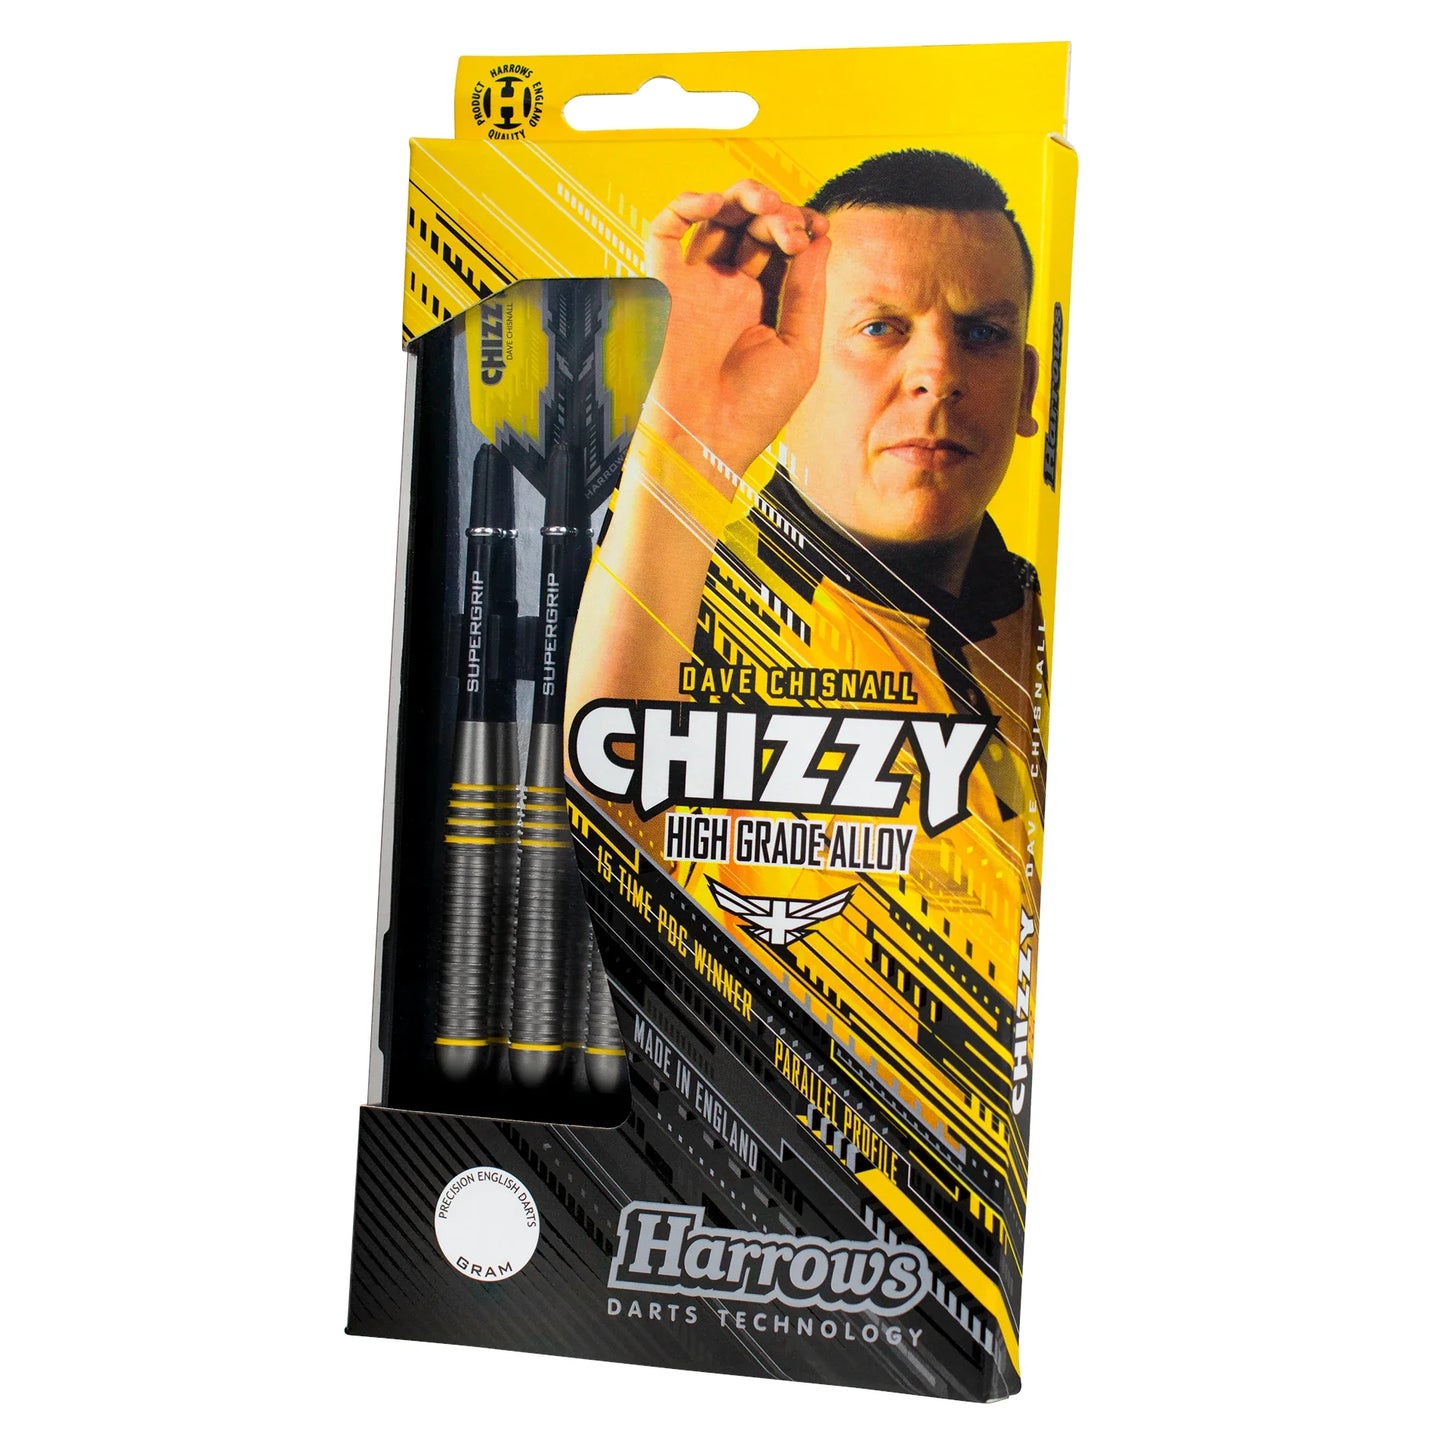 Harrows Chizzy High Grade Alloy 23g Darts